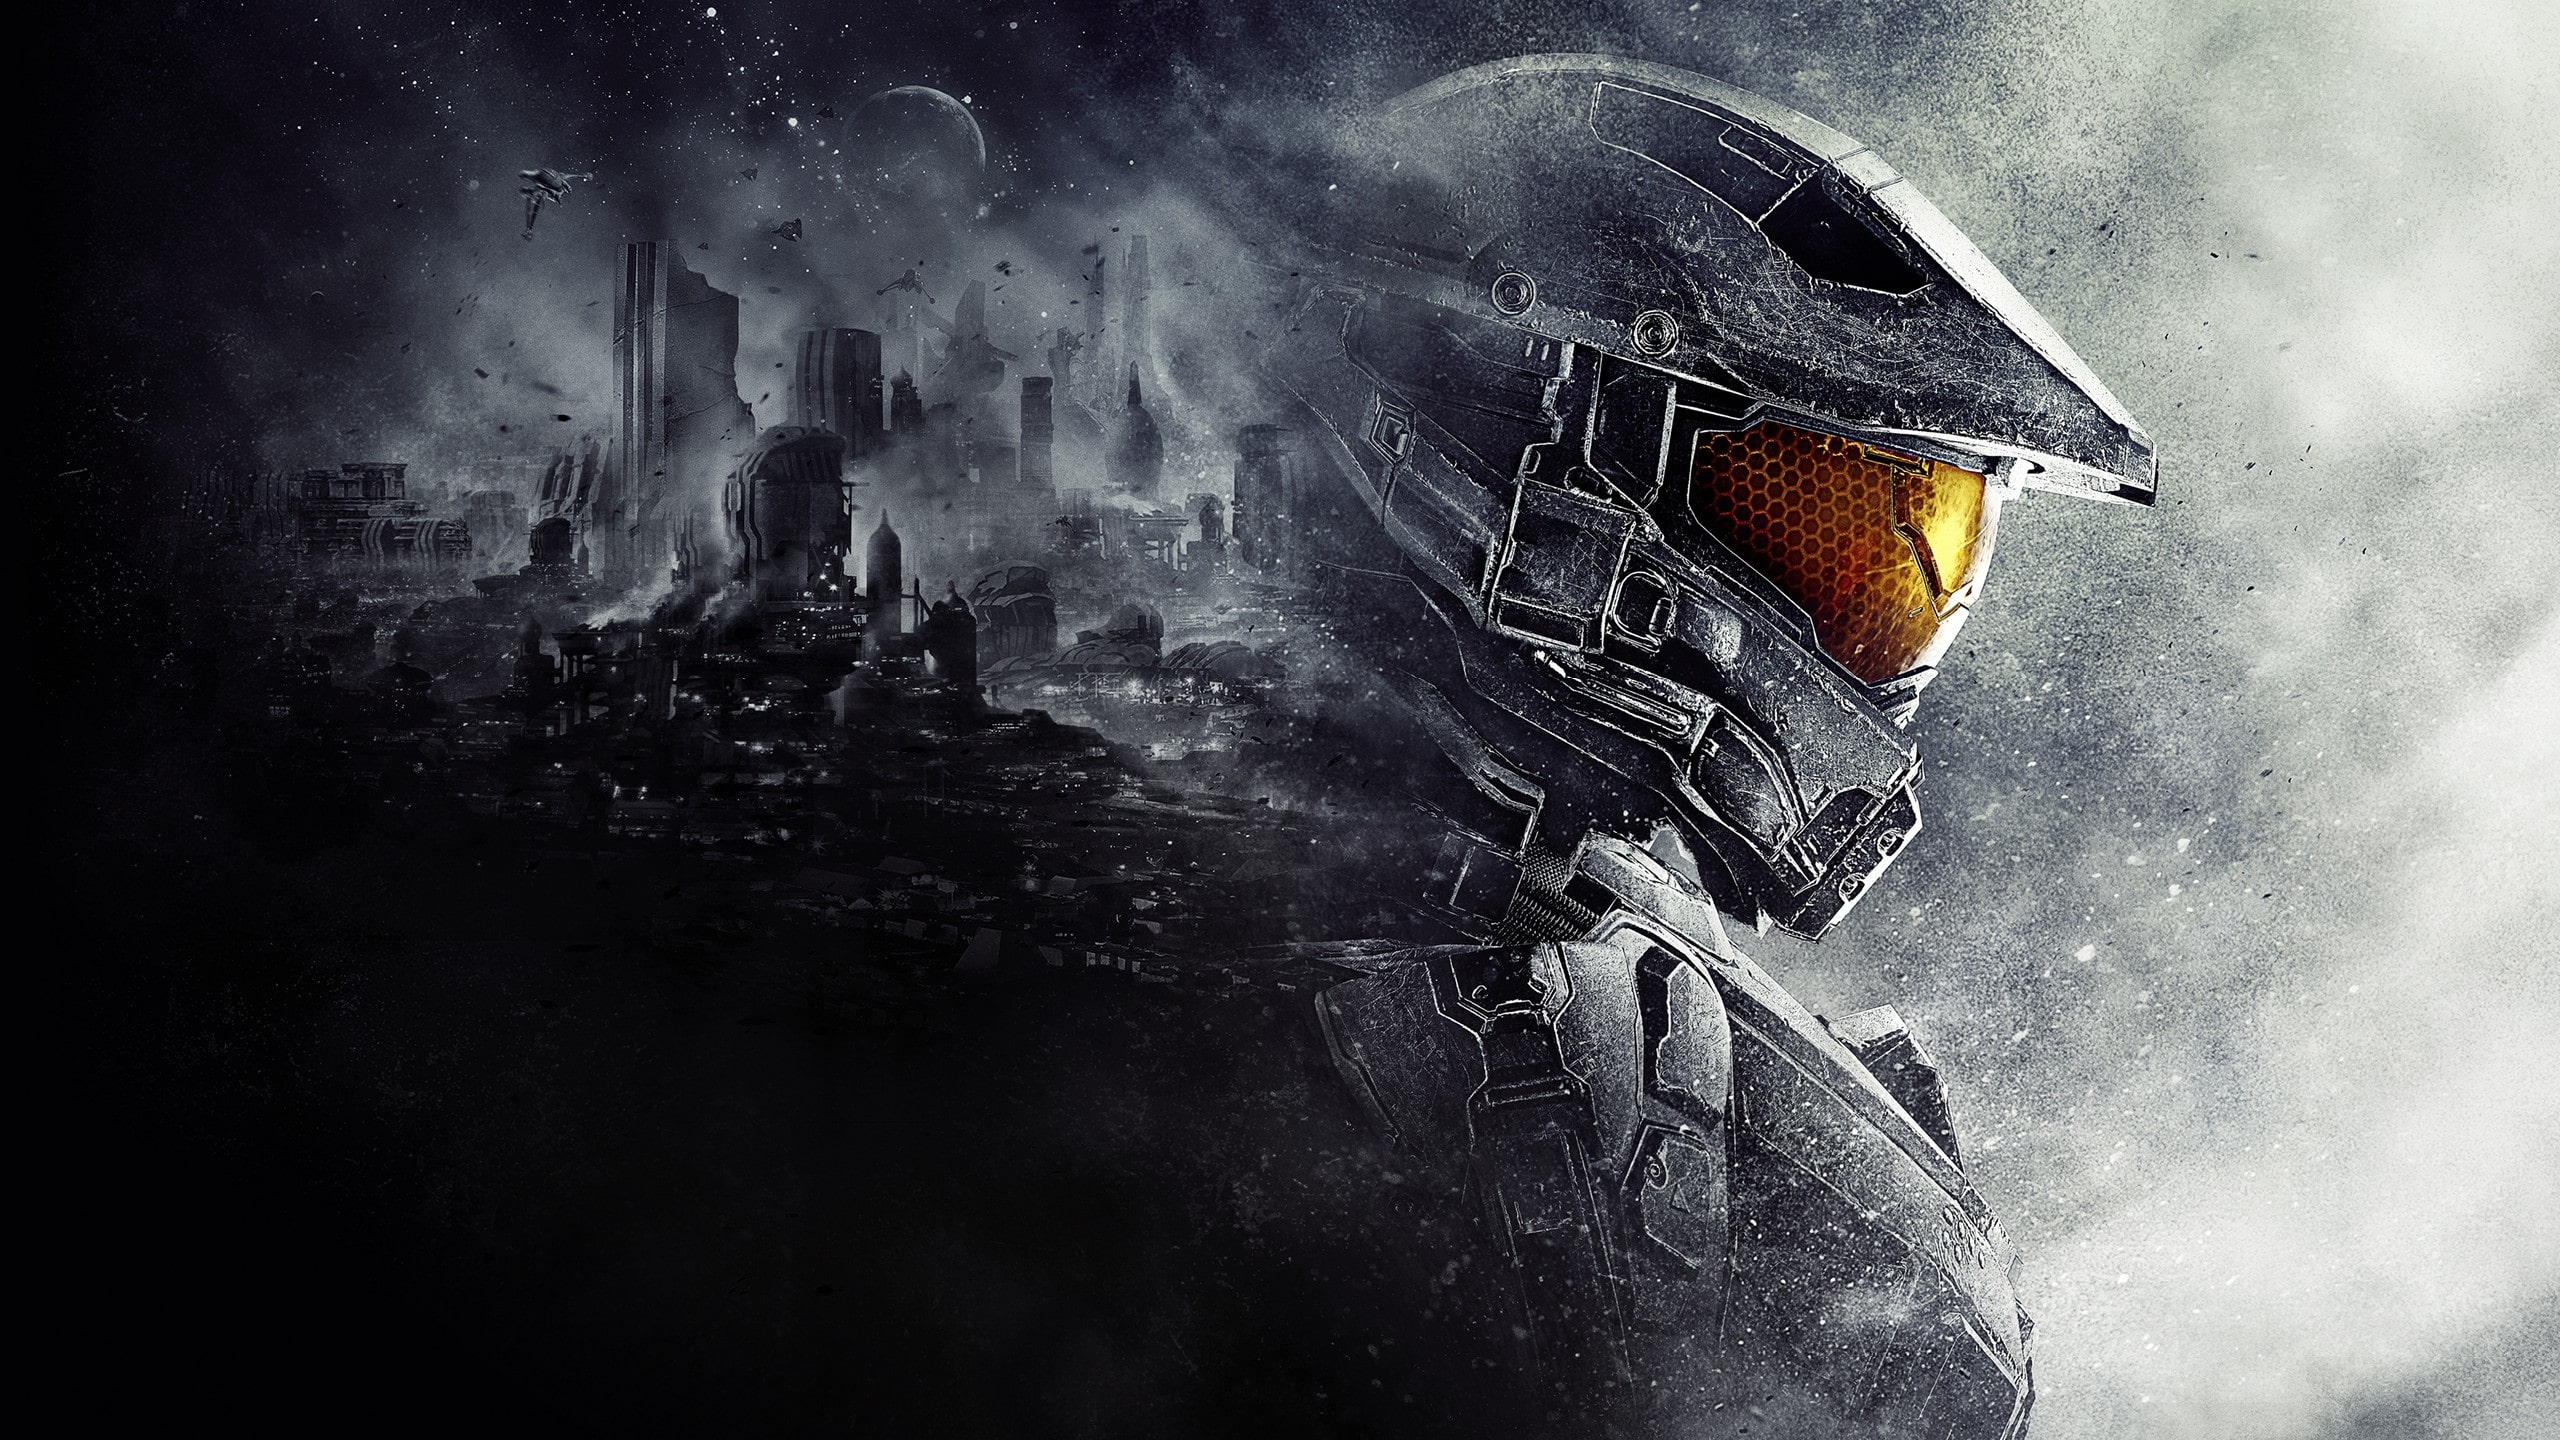 Halo Infinite Backgrounds - KoLPaPer - Awesome Free HD ...